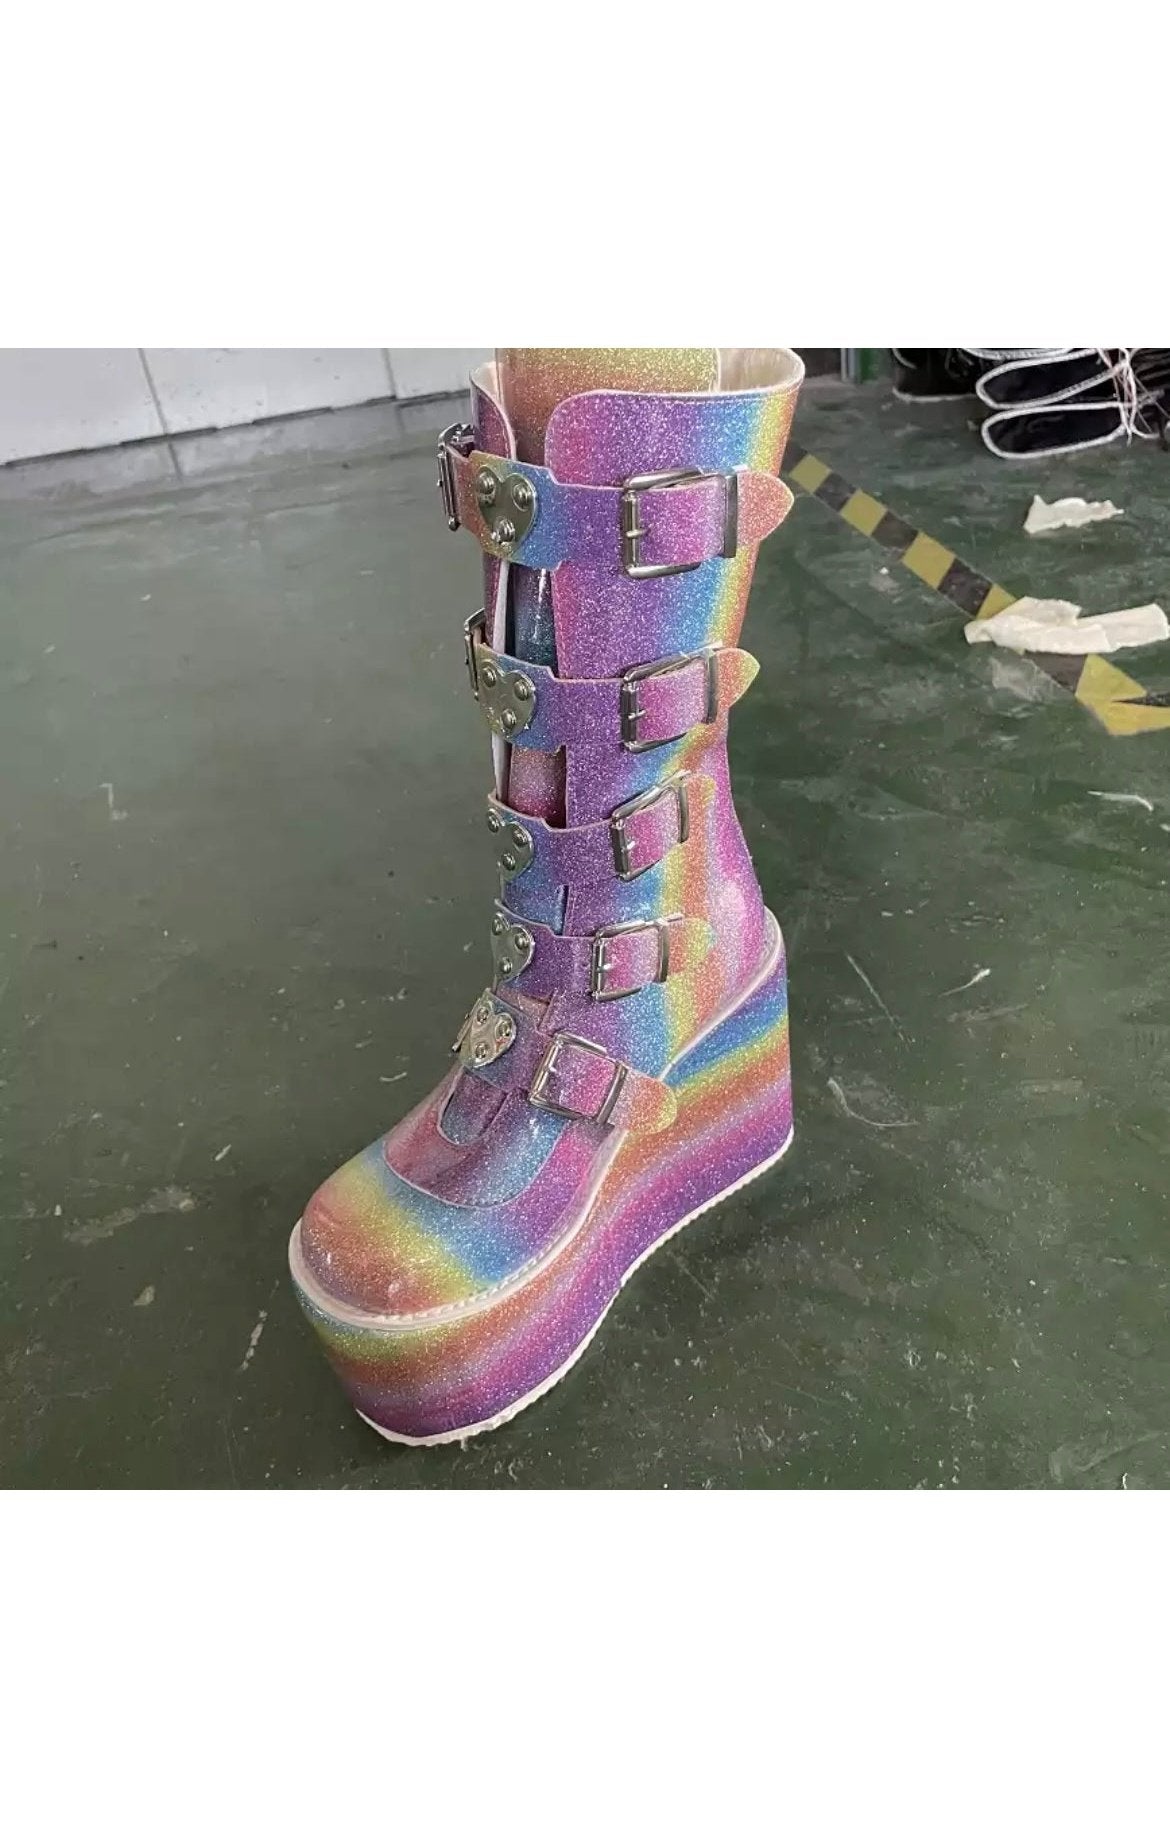 Platform Gothic Punk Cool Boots (Many Colors)